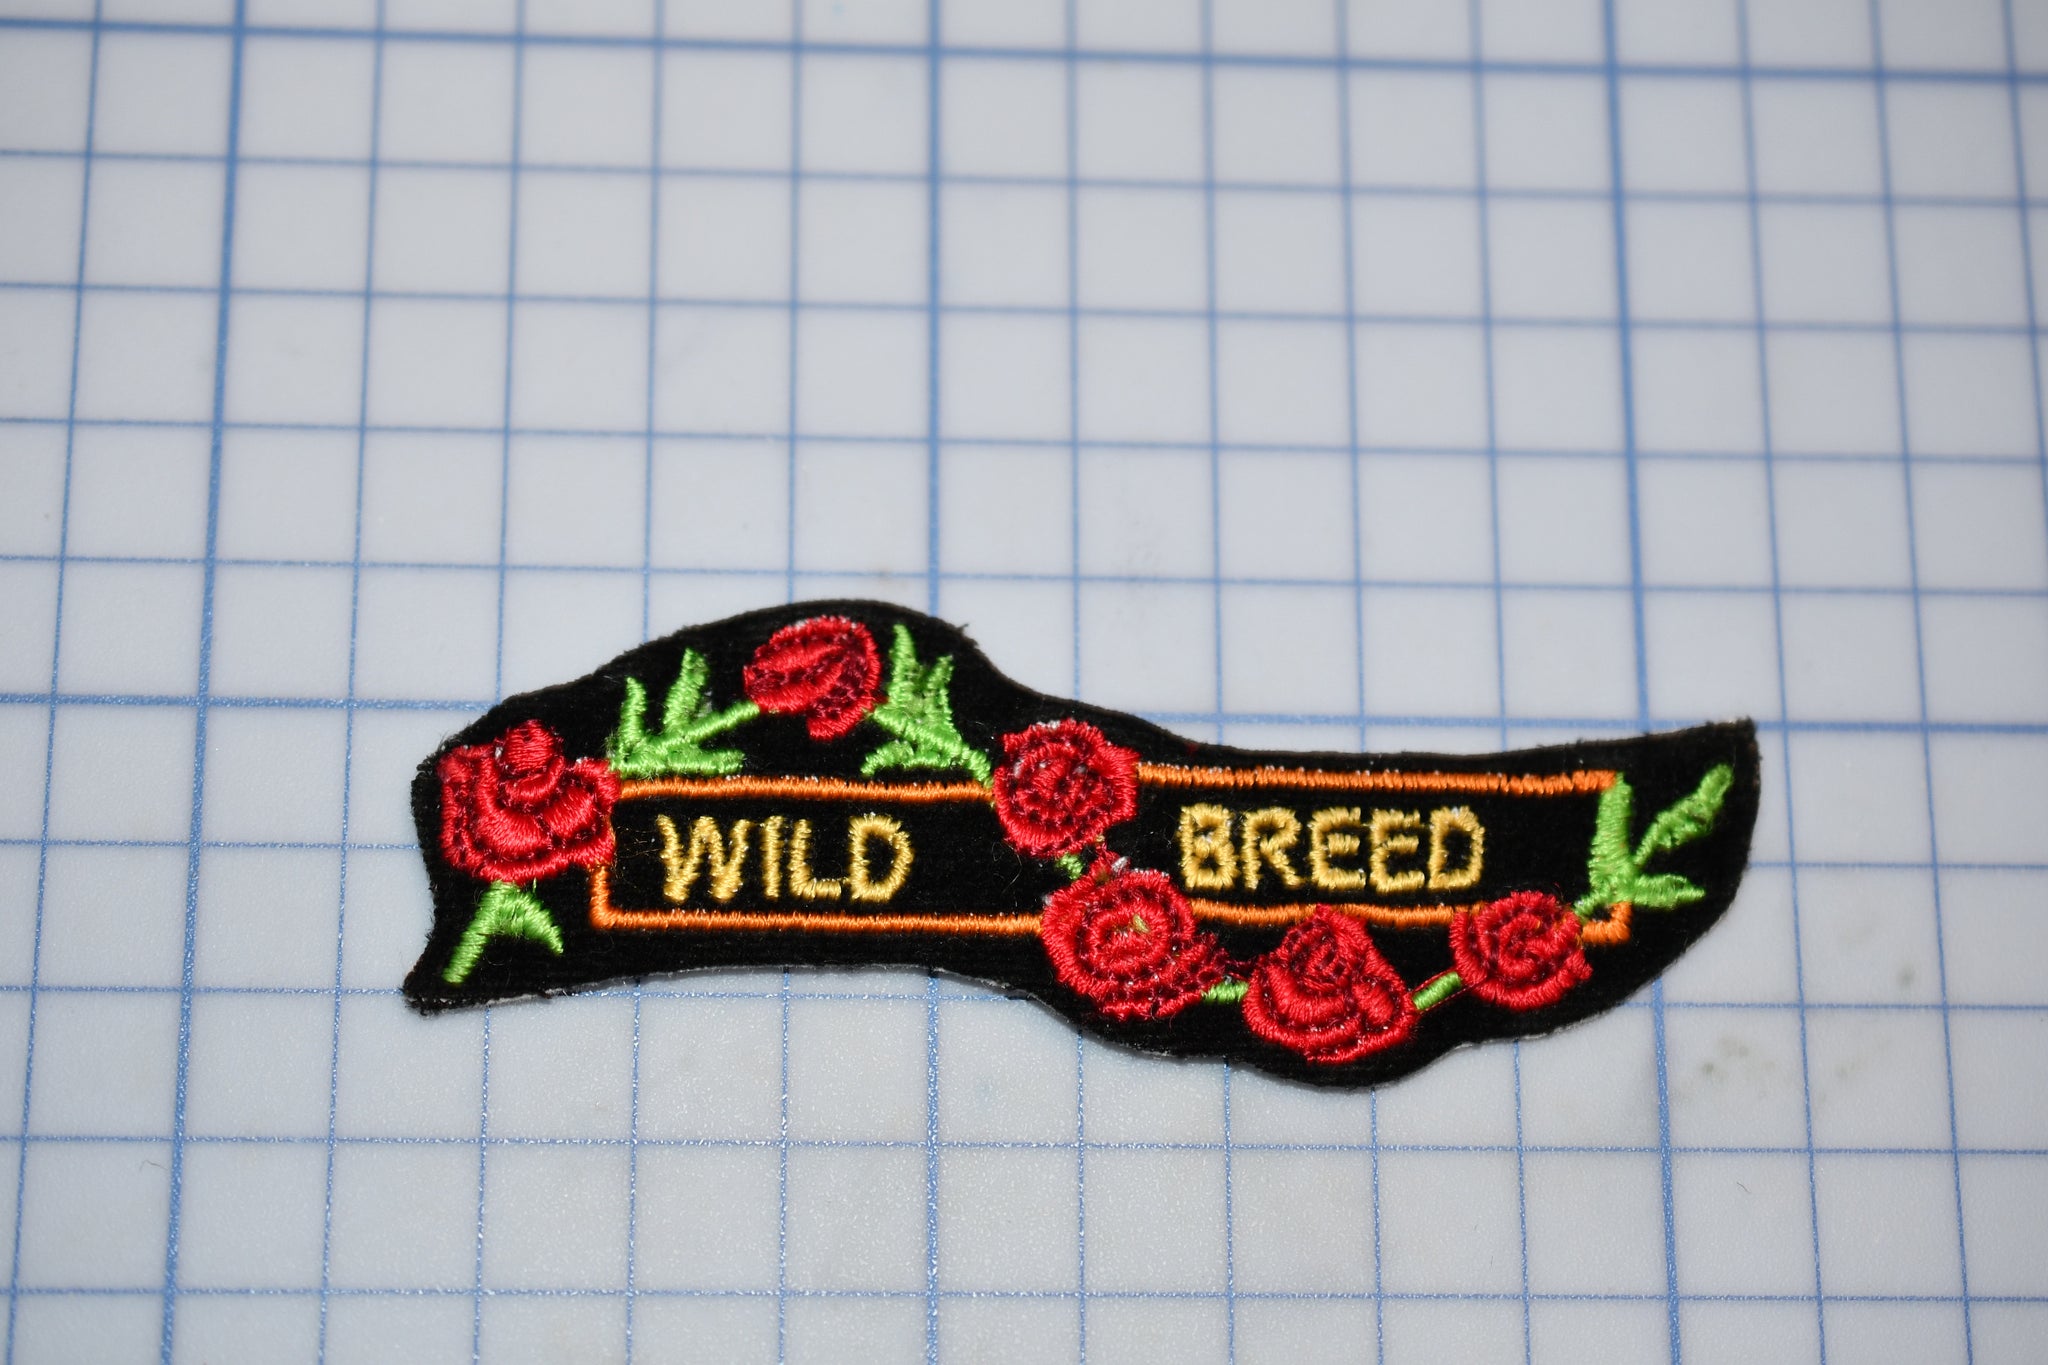 "Wild Breed" Sew On Biker Patch (B30-366)